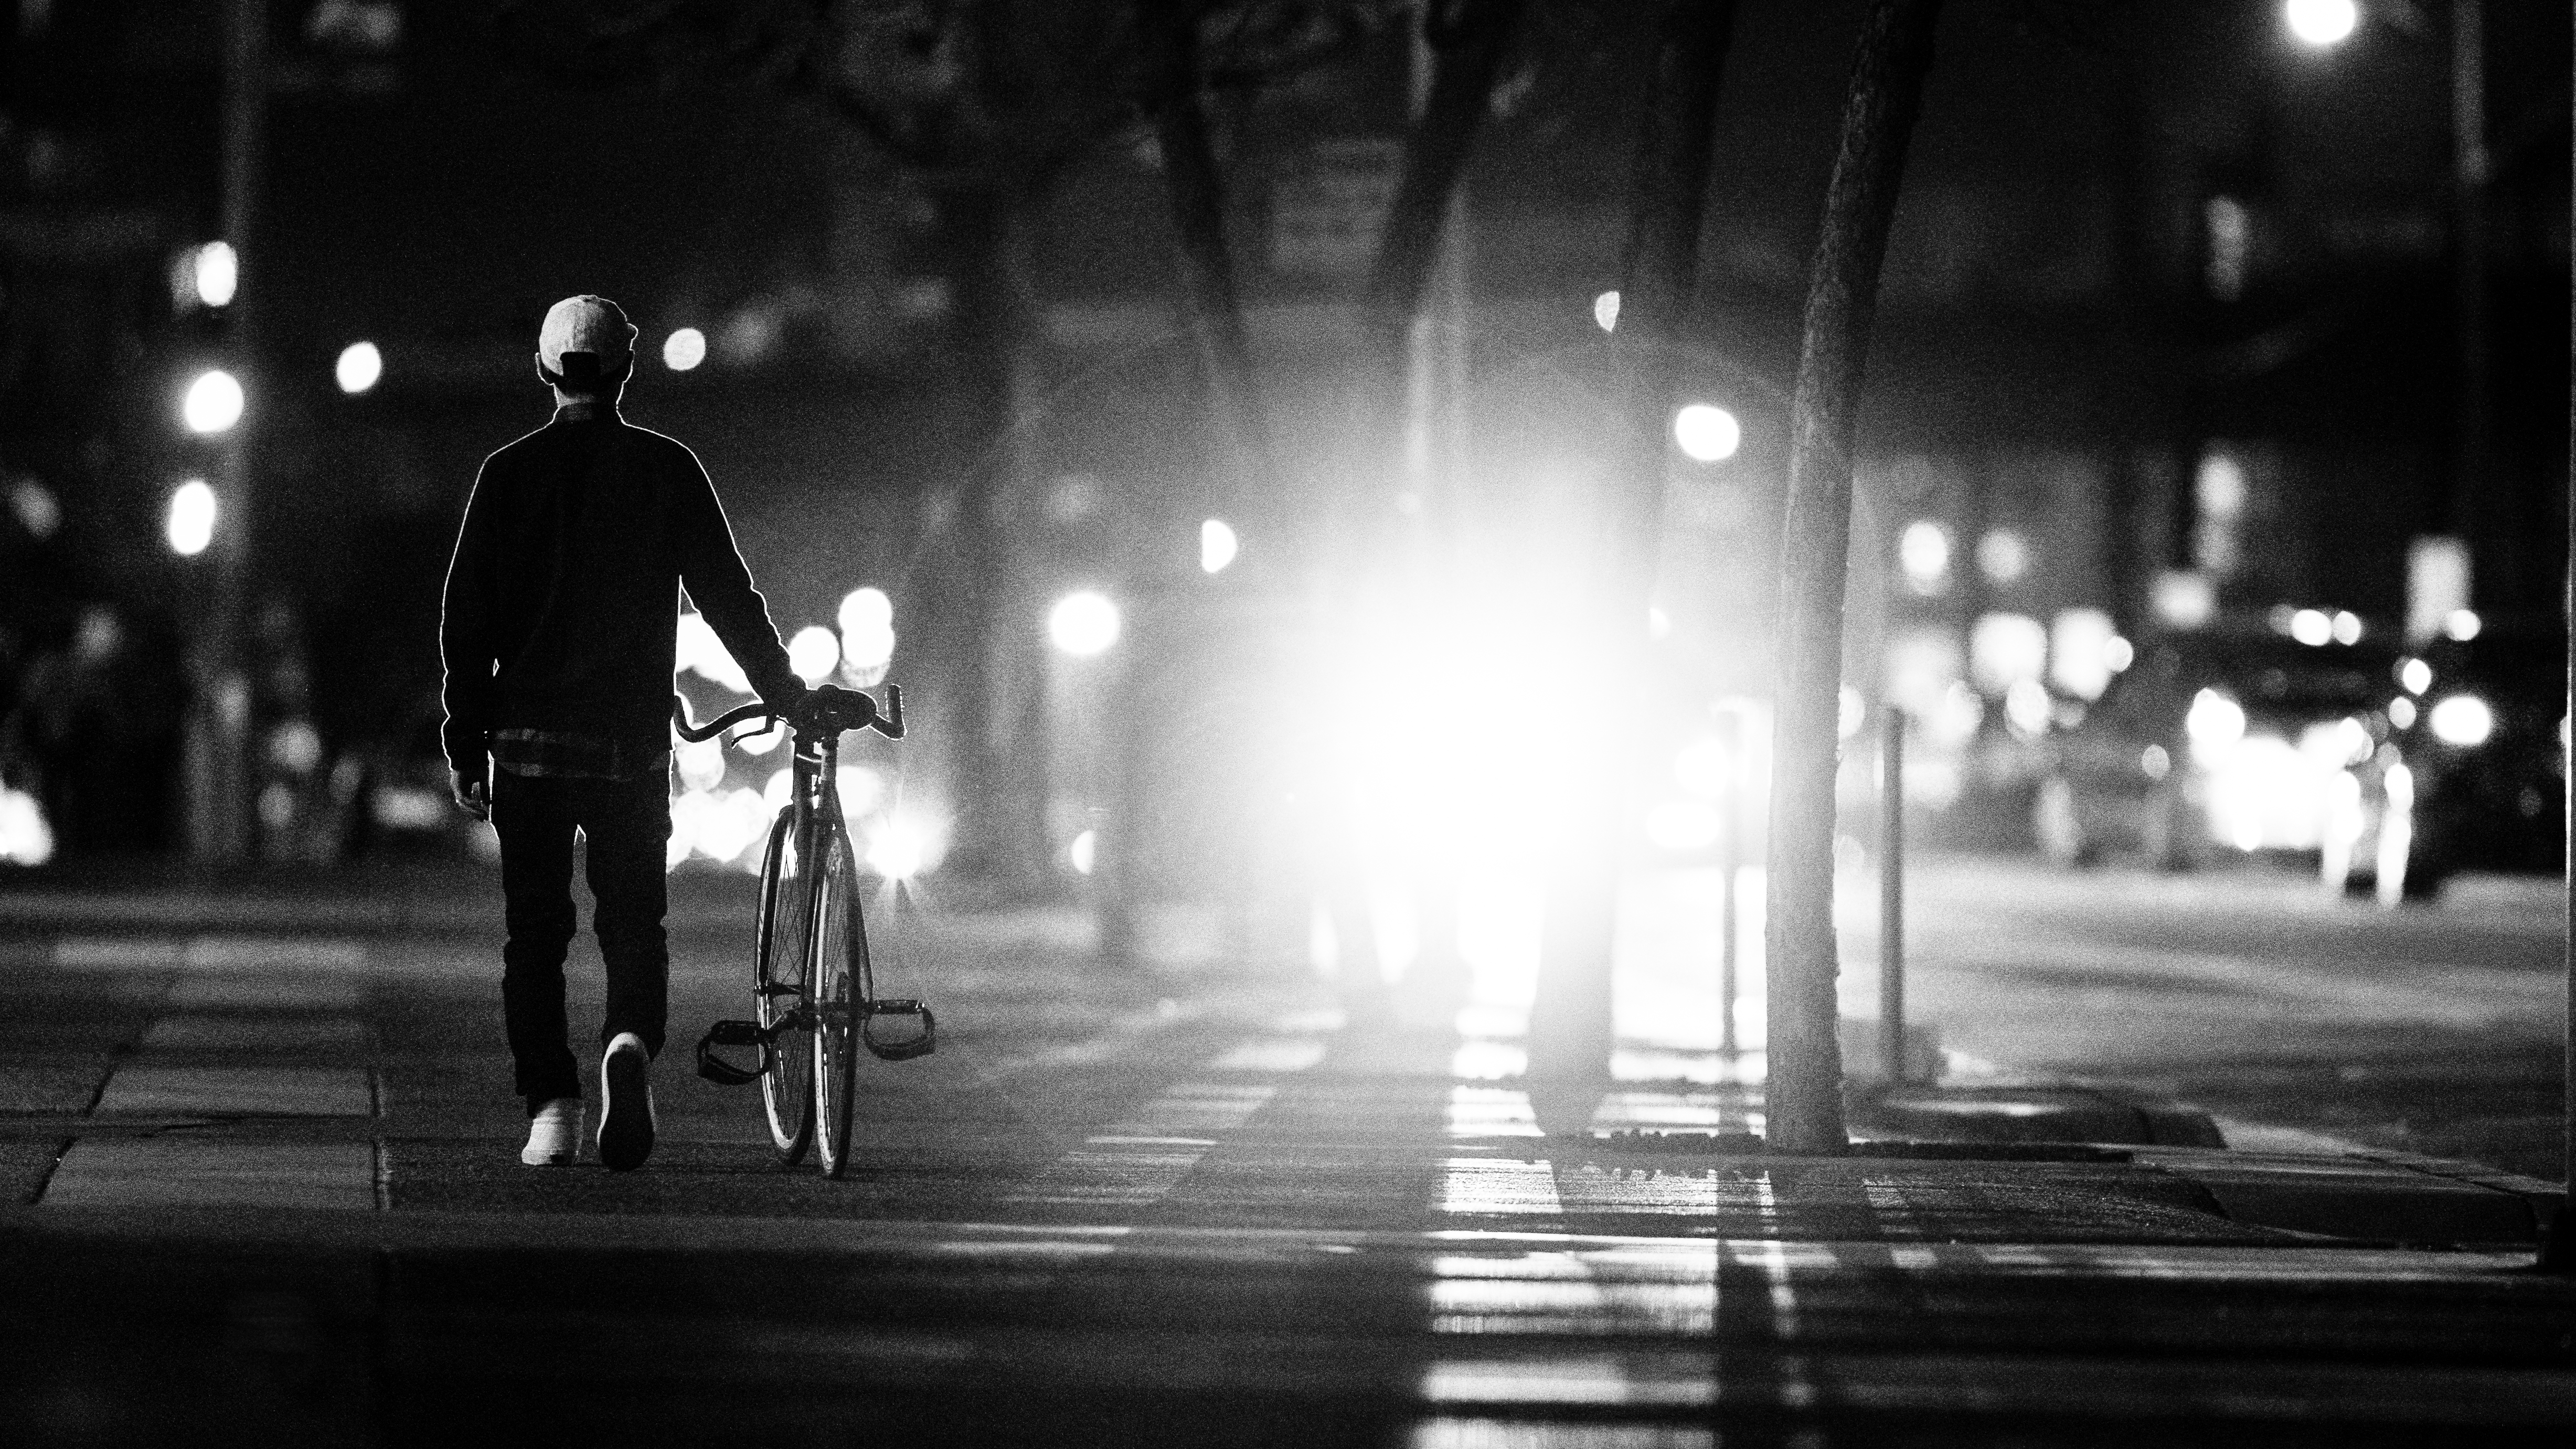 Walking the bike in the city photo